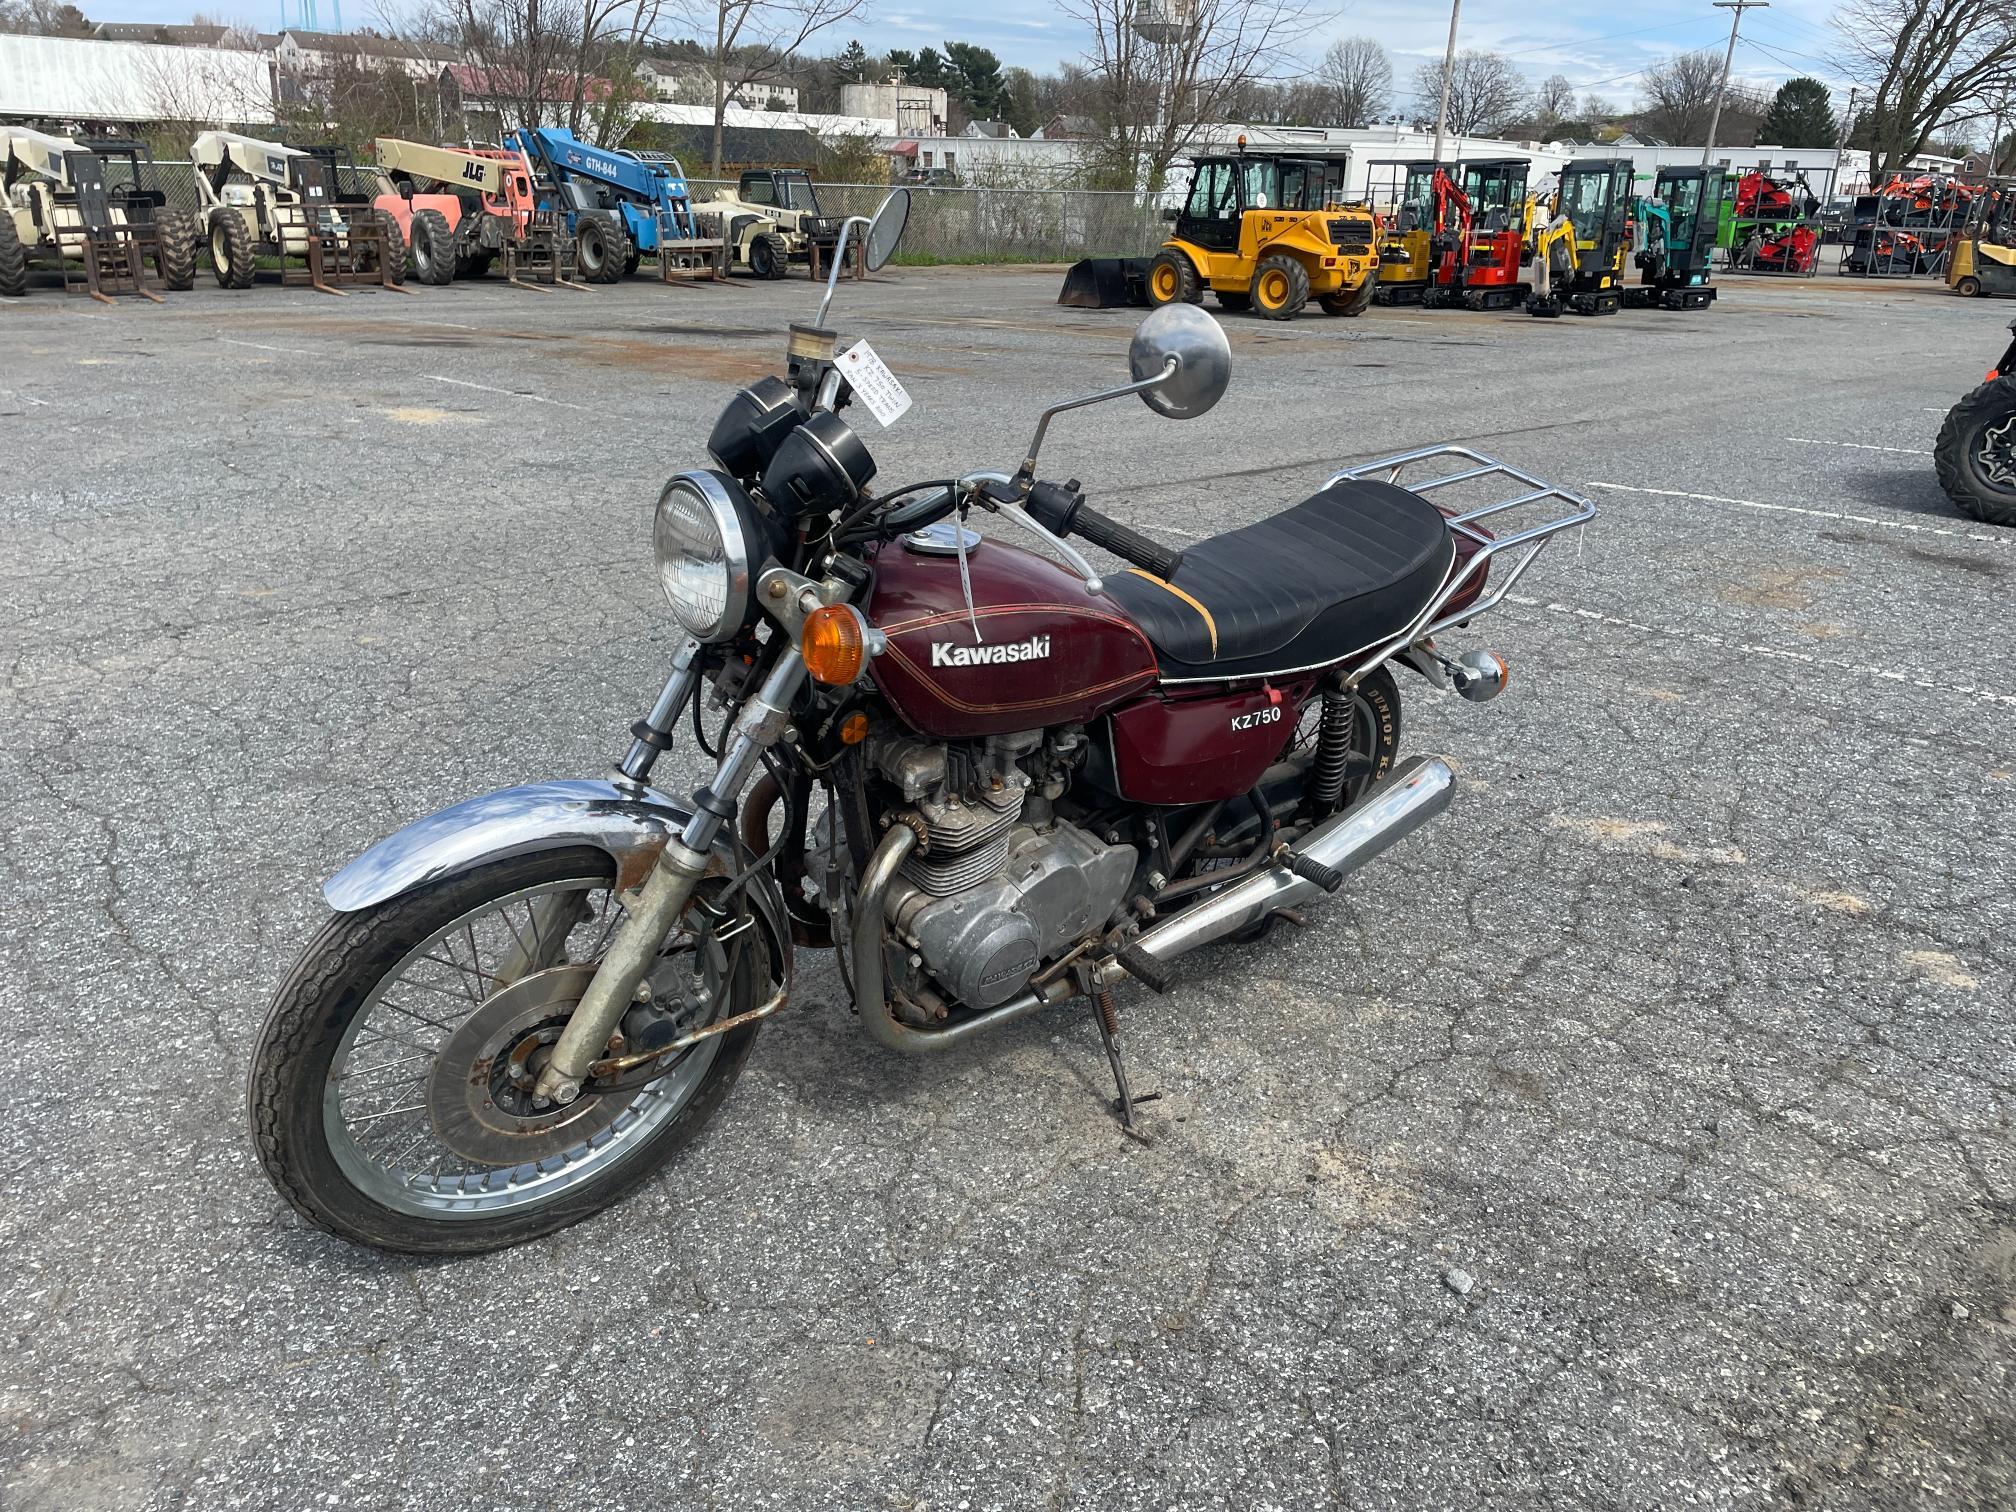 1978 Kawasaki KZ750 Twin Motorcycle